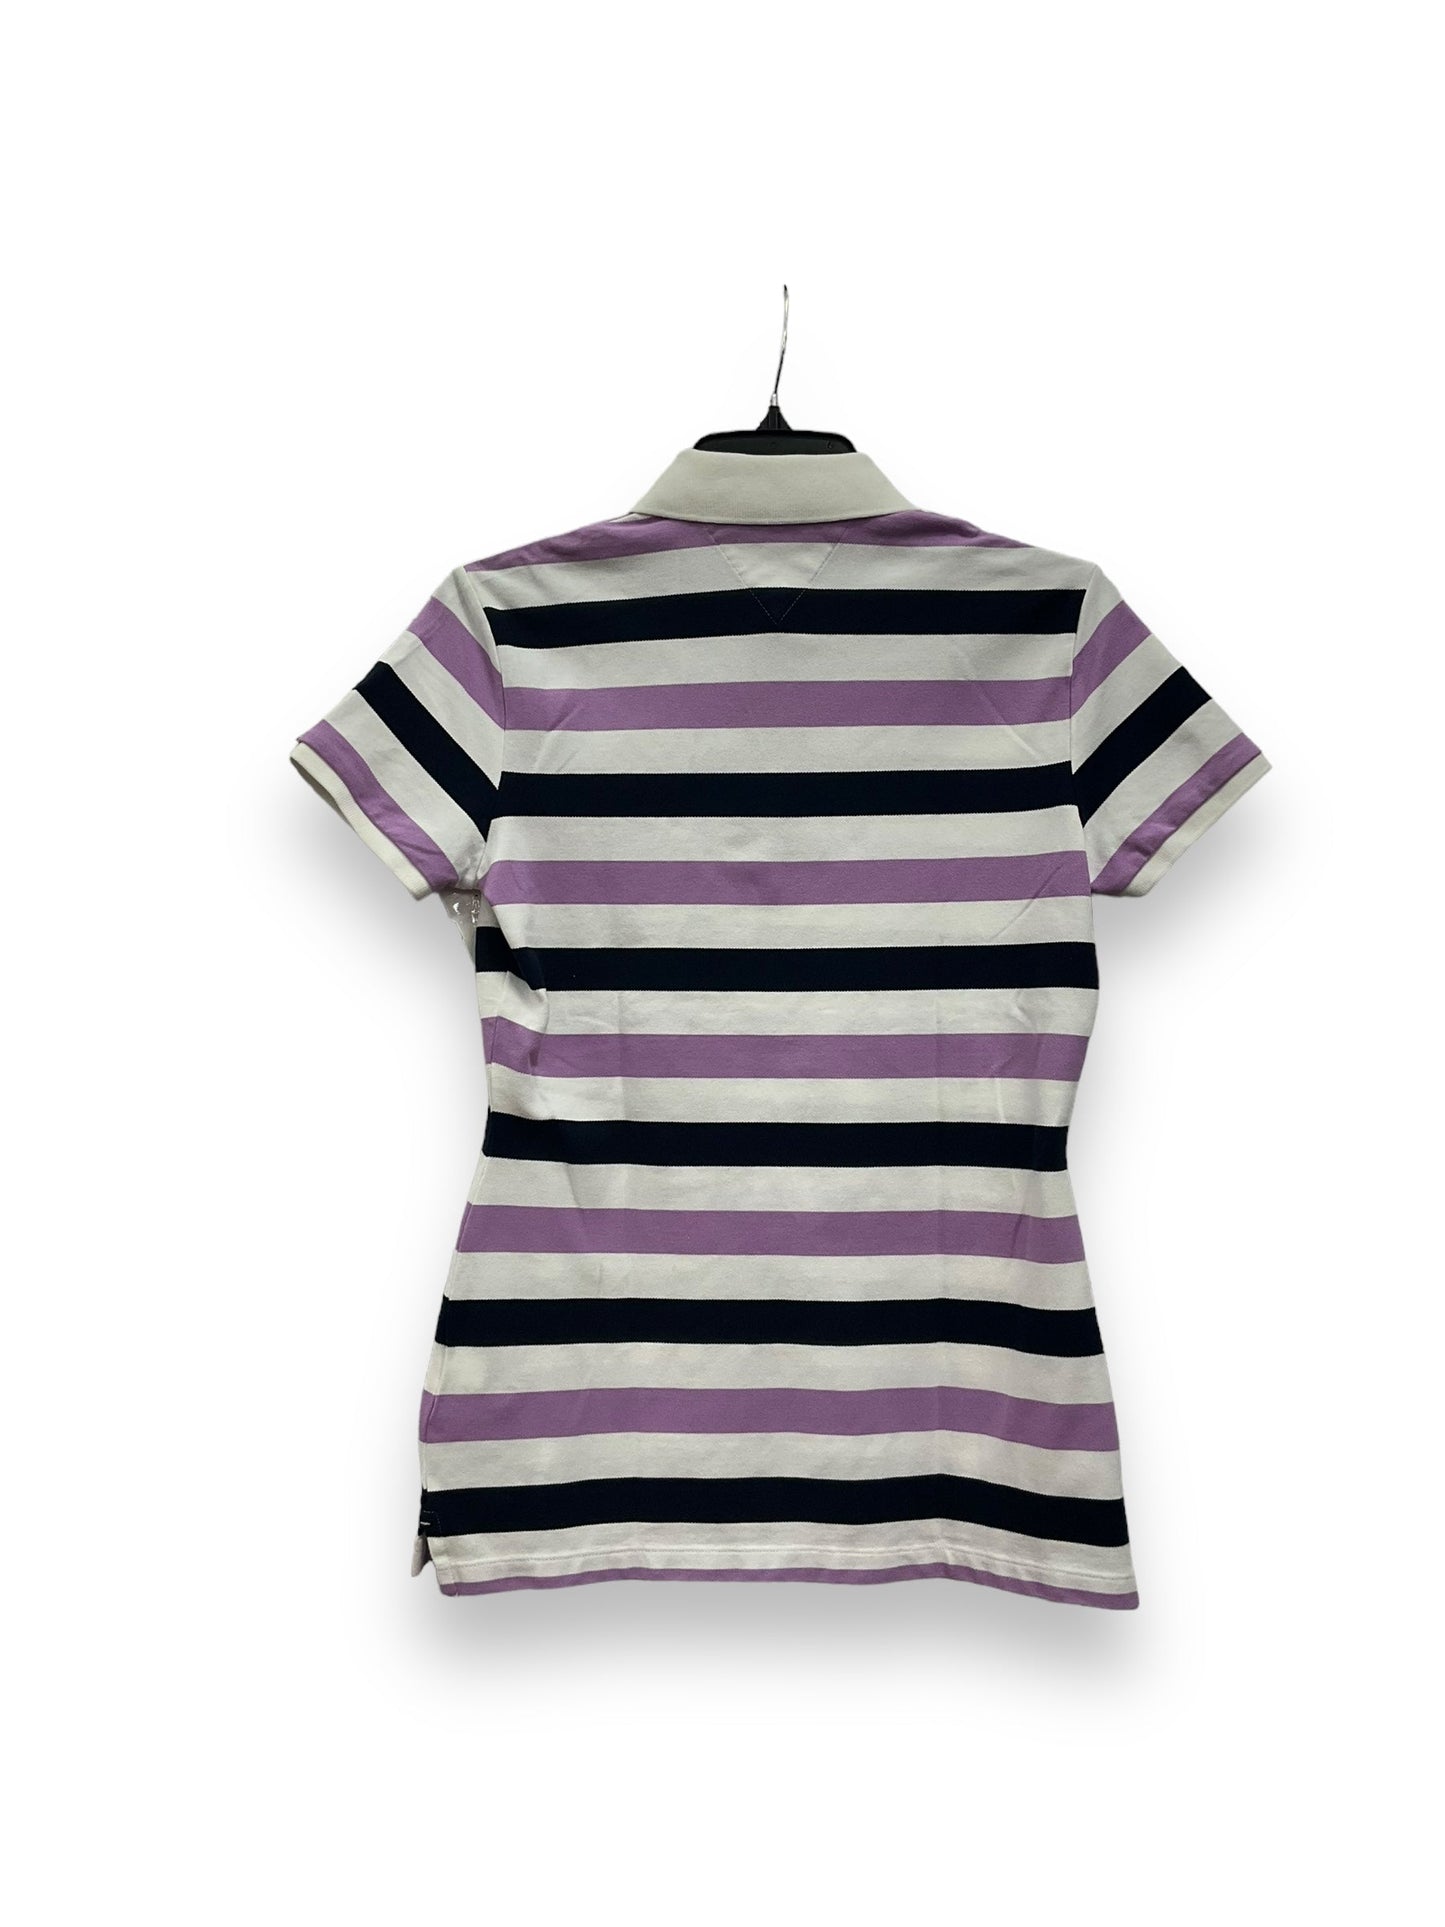 Striped Pattern Top Short Sleeve Basic Tommy Hilfiger, Size S